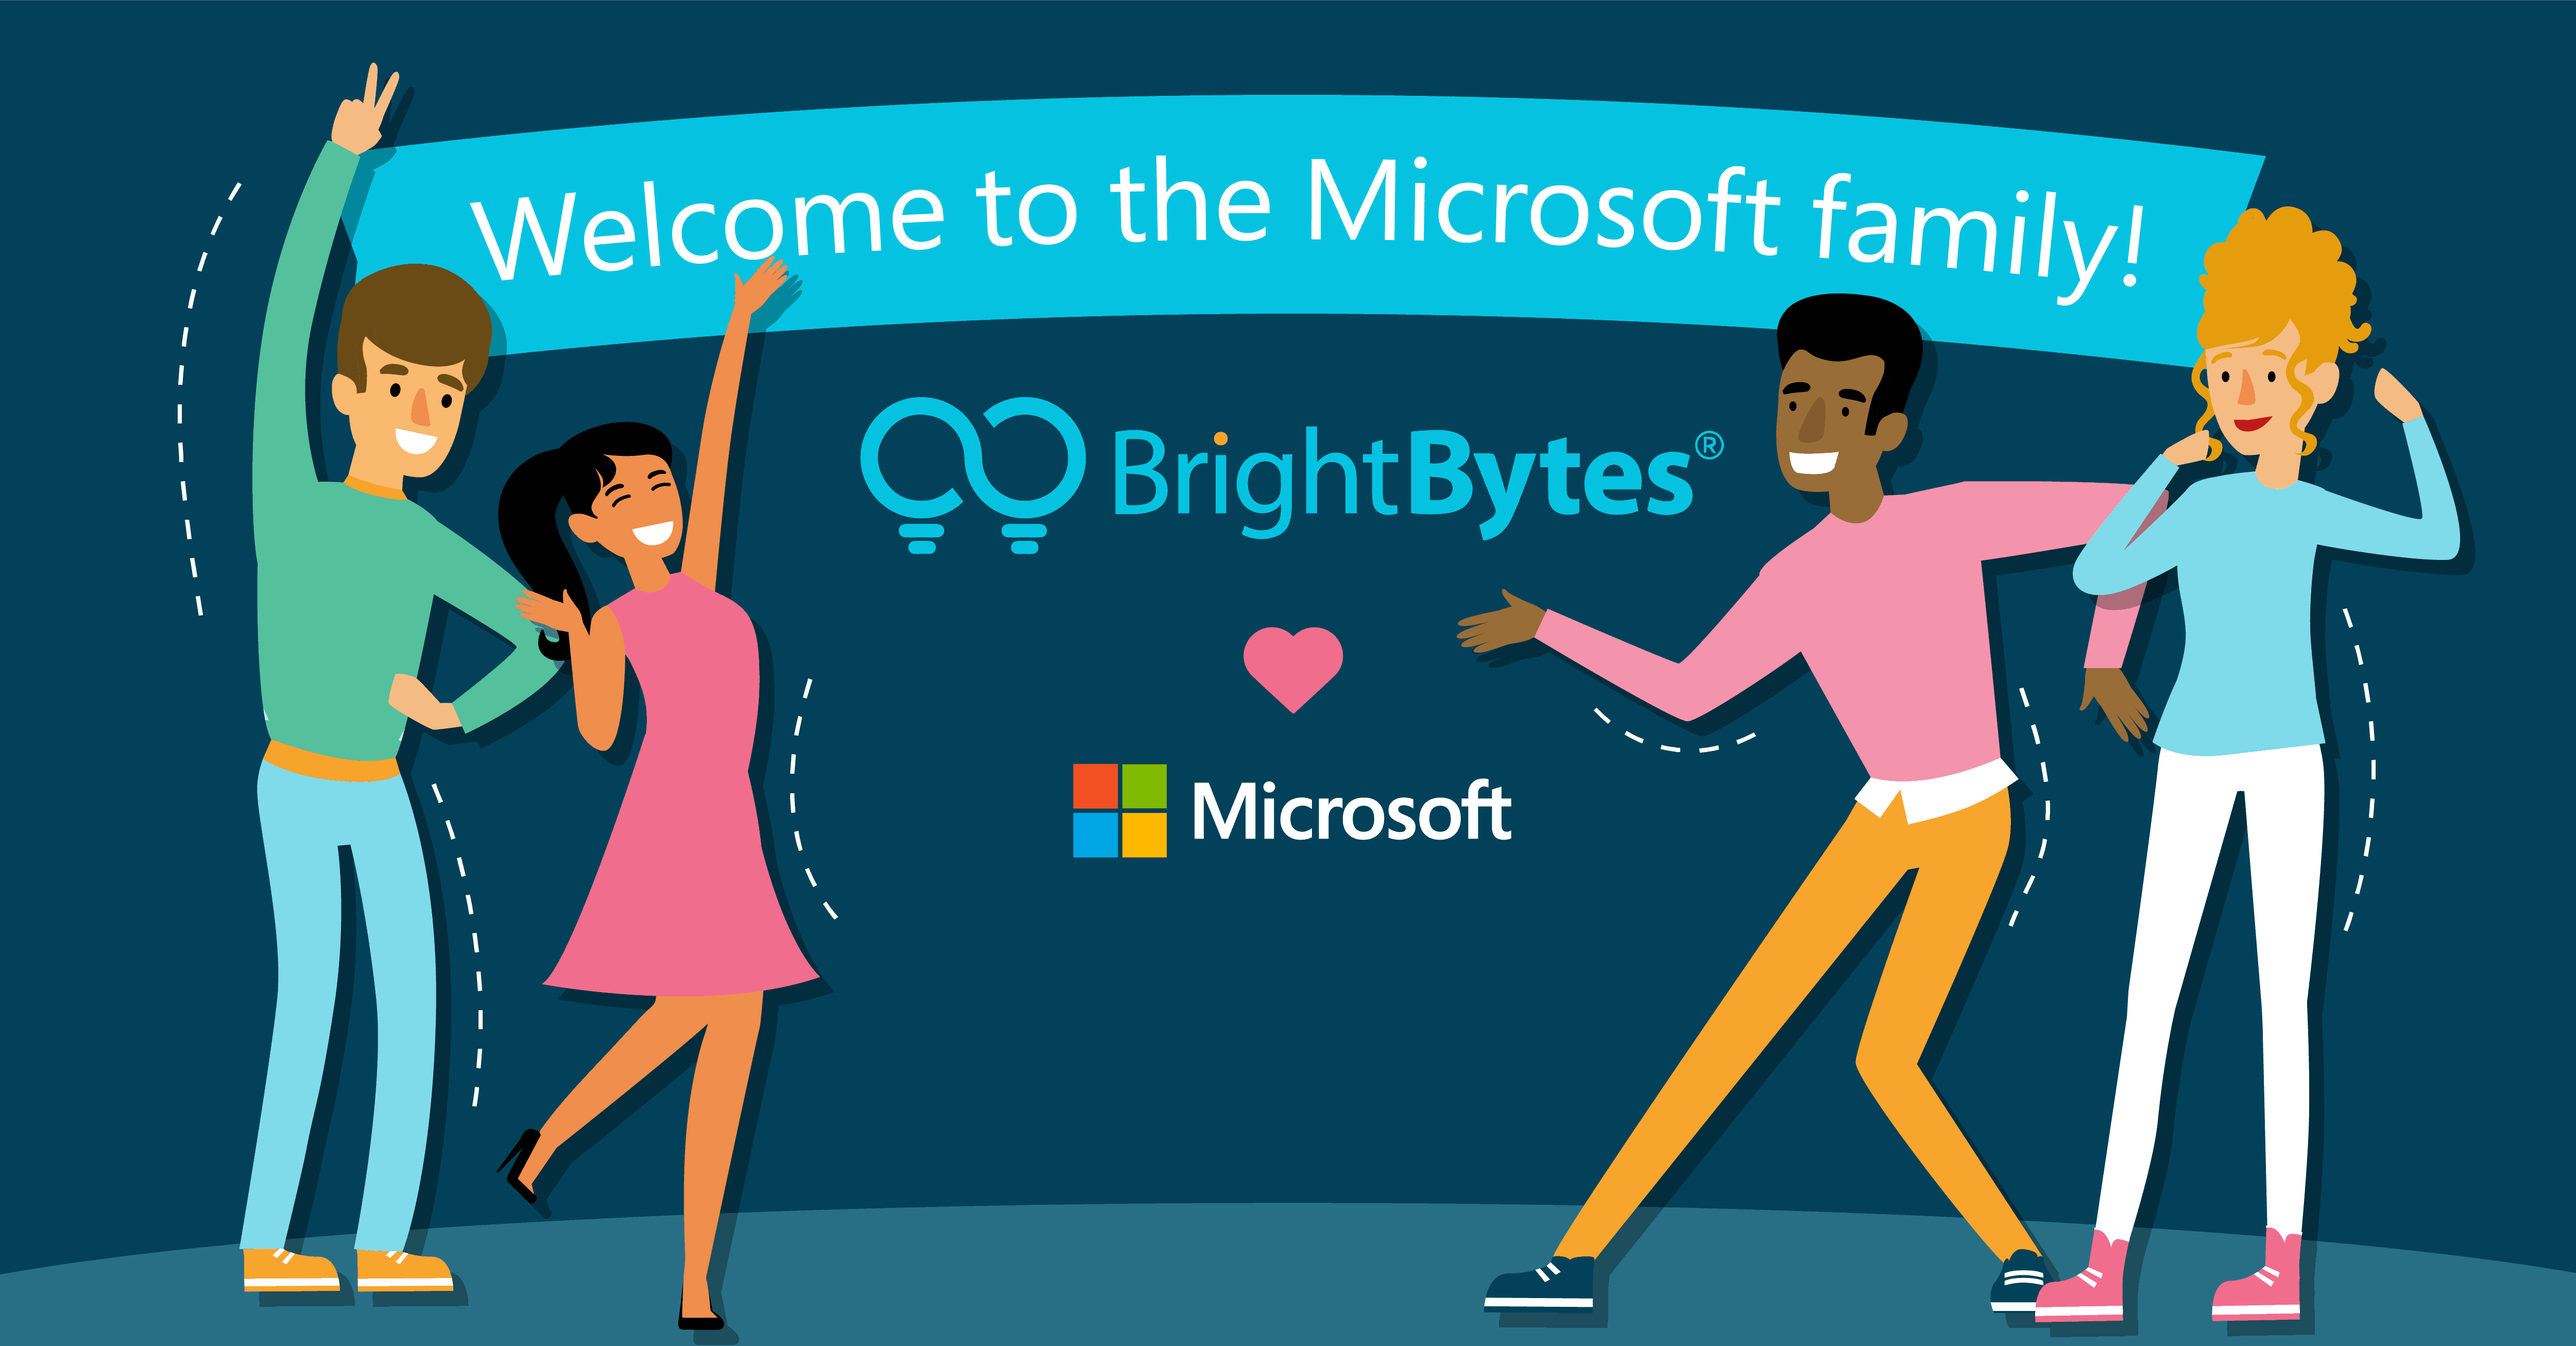 Microsoft is buying DataSense data management platform from BrightBytes - OnMSFT.com - February 4, 2019